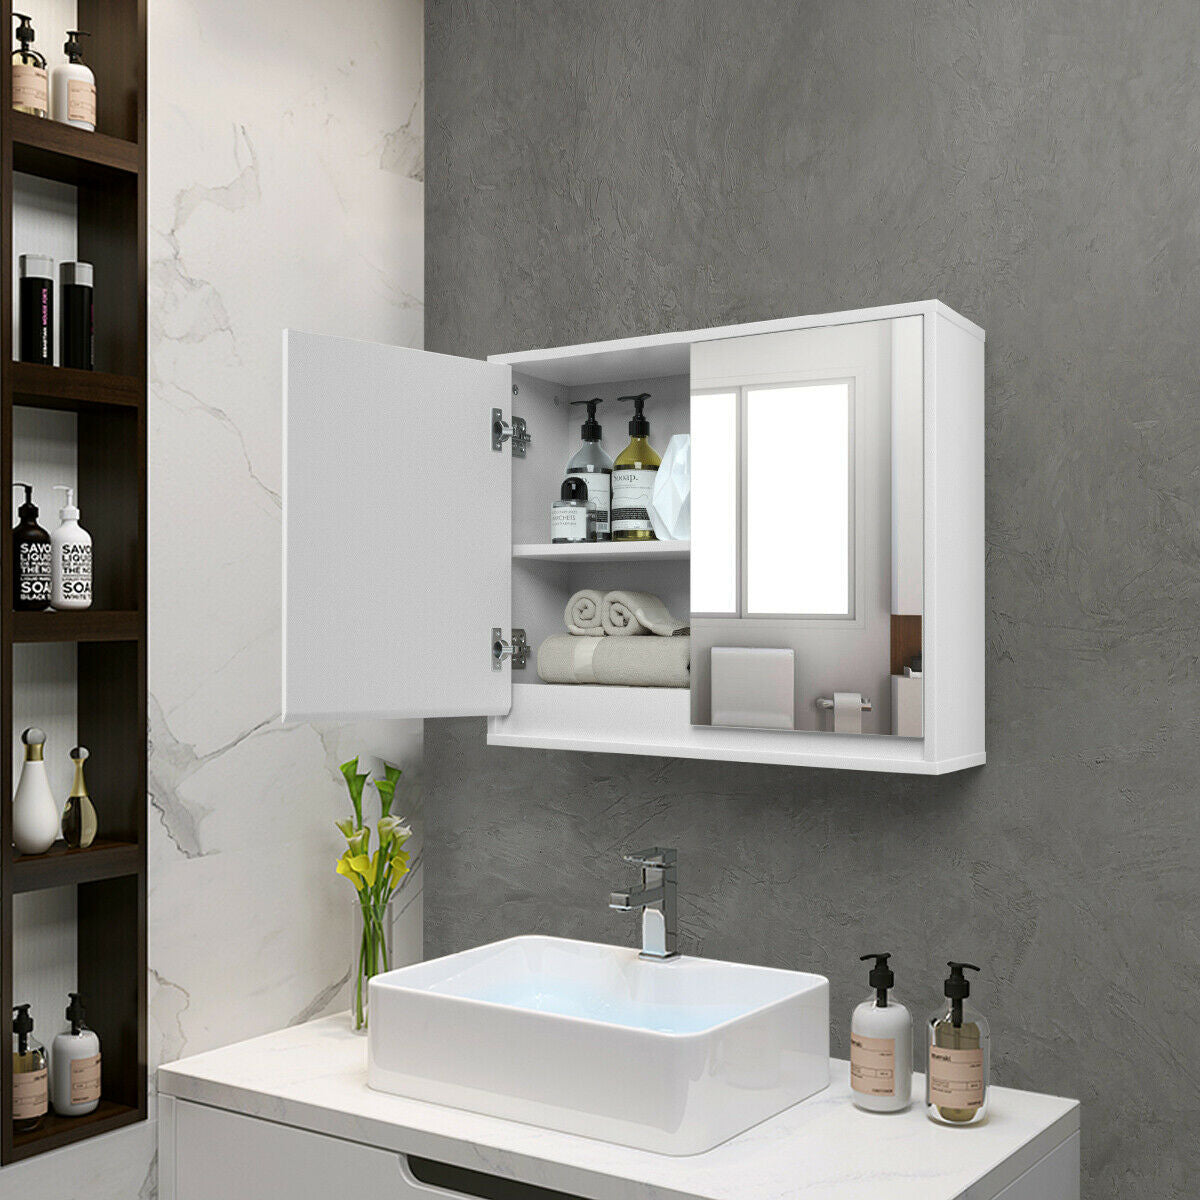 2-Door Wall-Mounted Bathroom Mirrored Medicine Cabinet, White - Gallery Canada